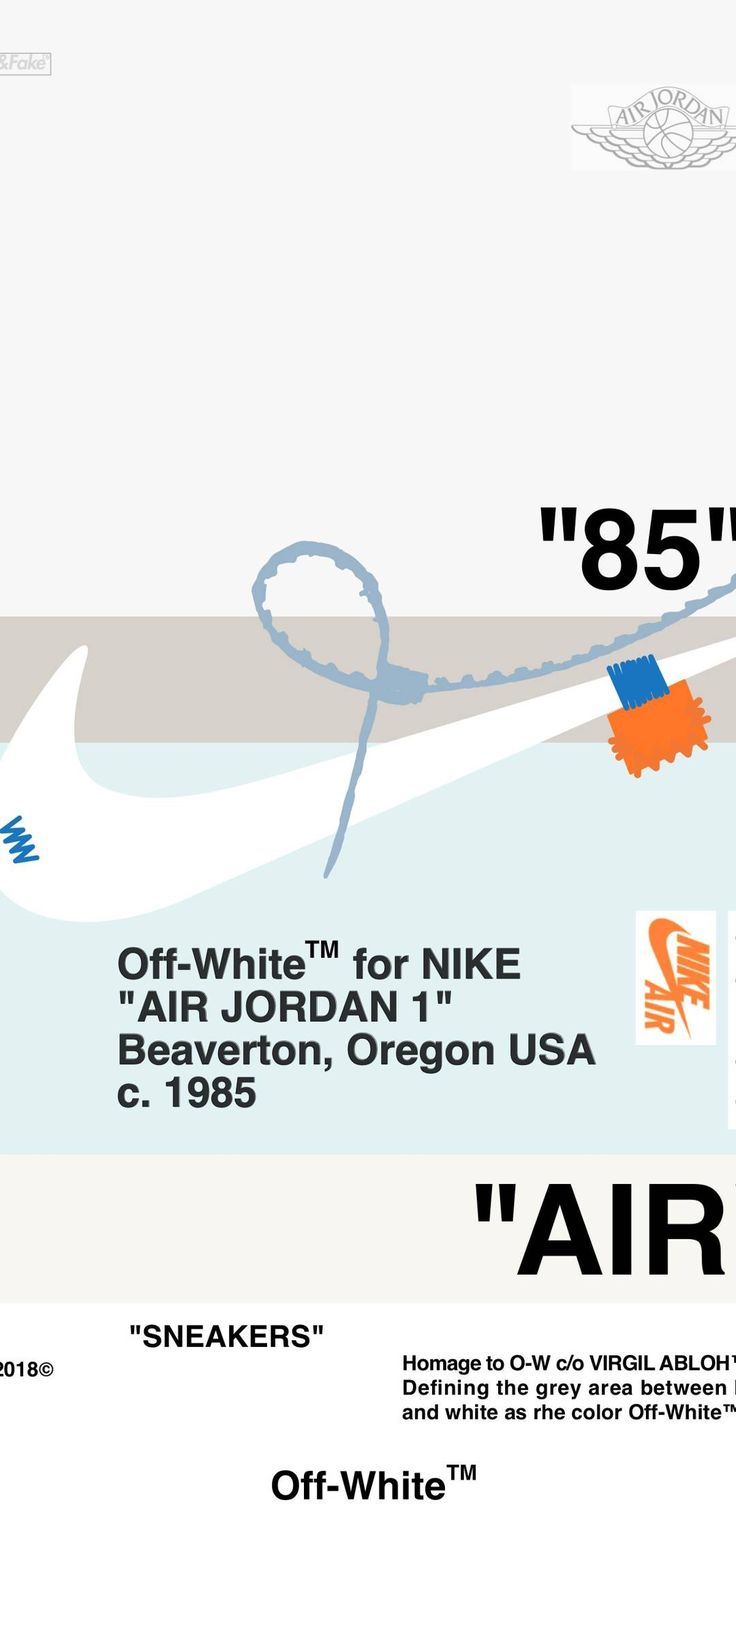  Off White Hintergrundbild 736x1635. Nike Air Jordan 1 Off White™. Cool Background Wallpaper, Nike Wallpaper, Pretty Wallpaper Iphone